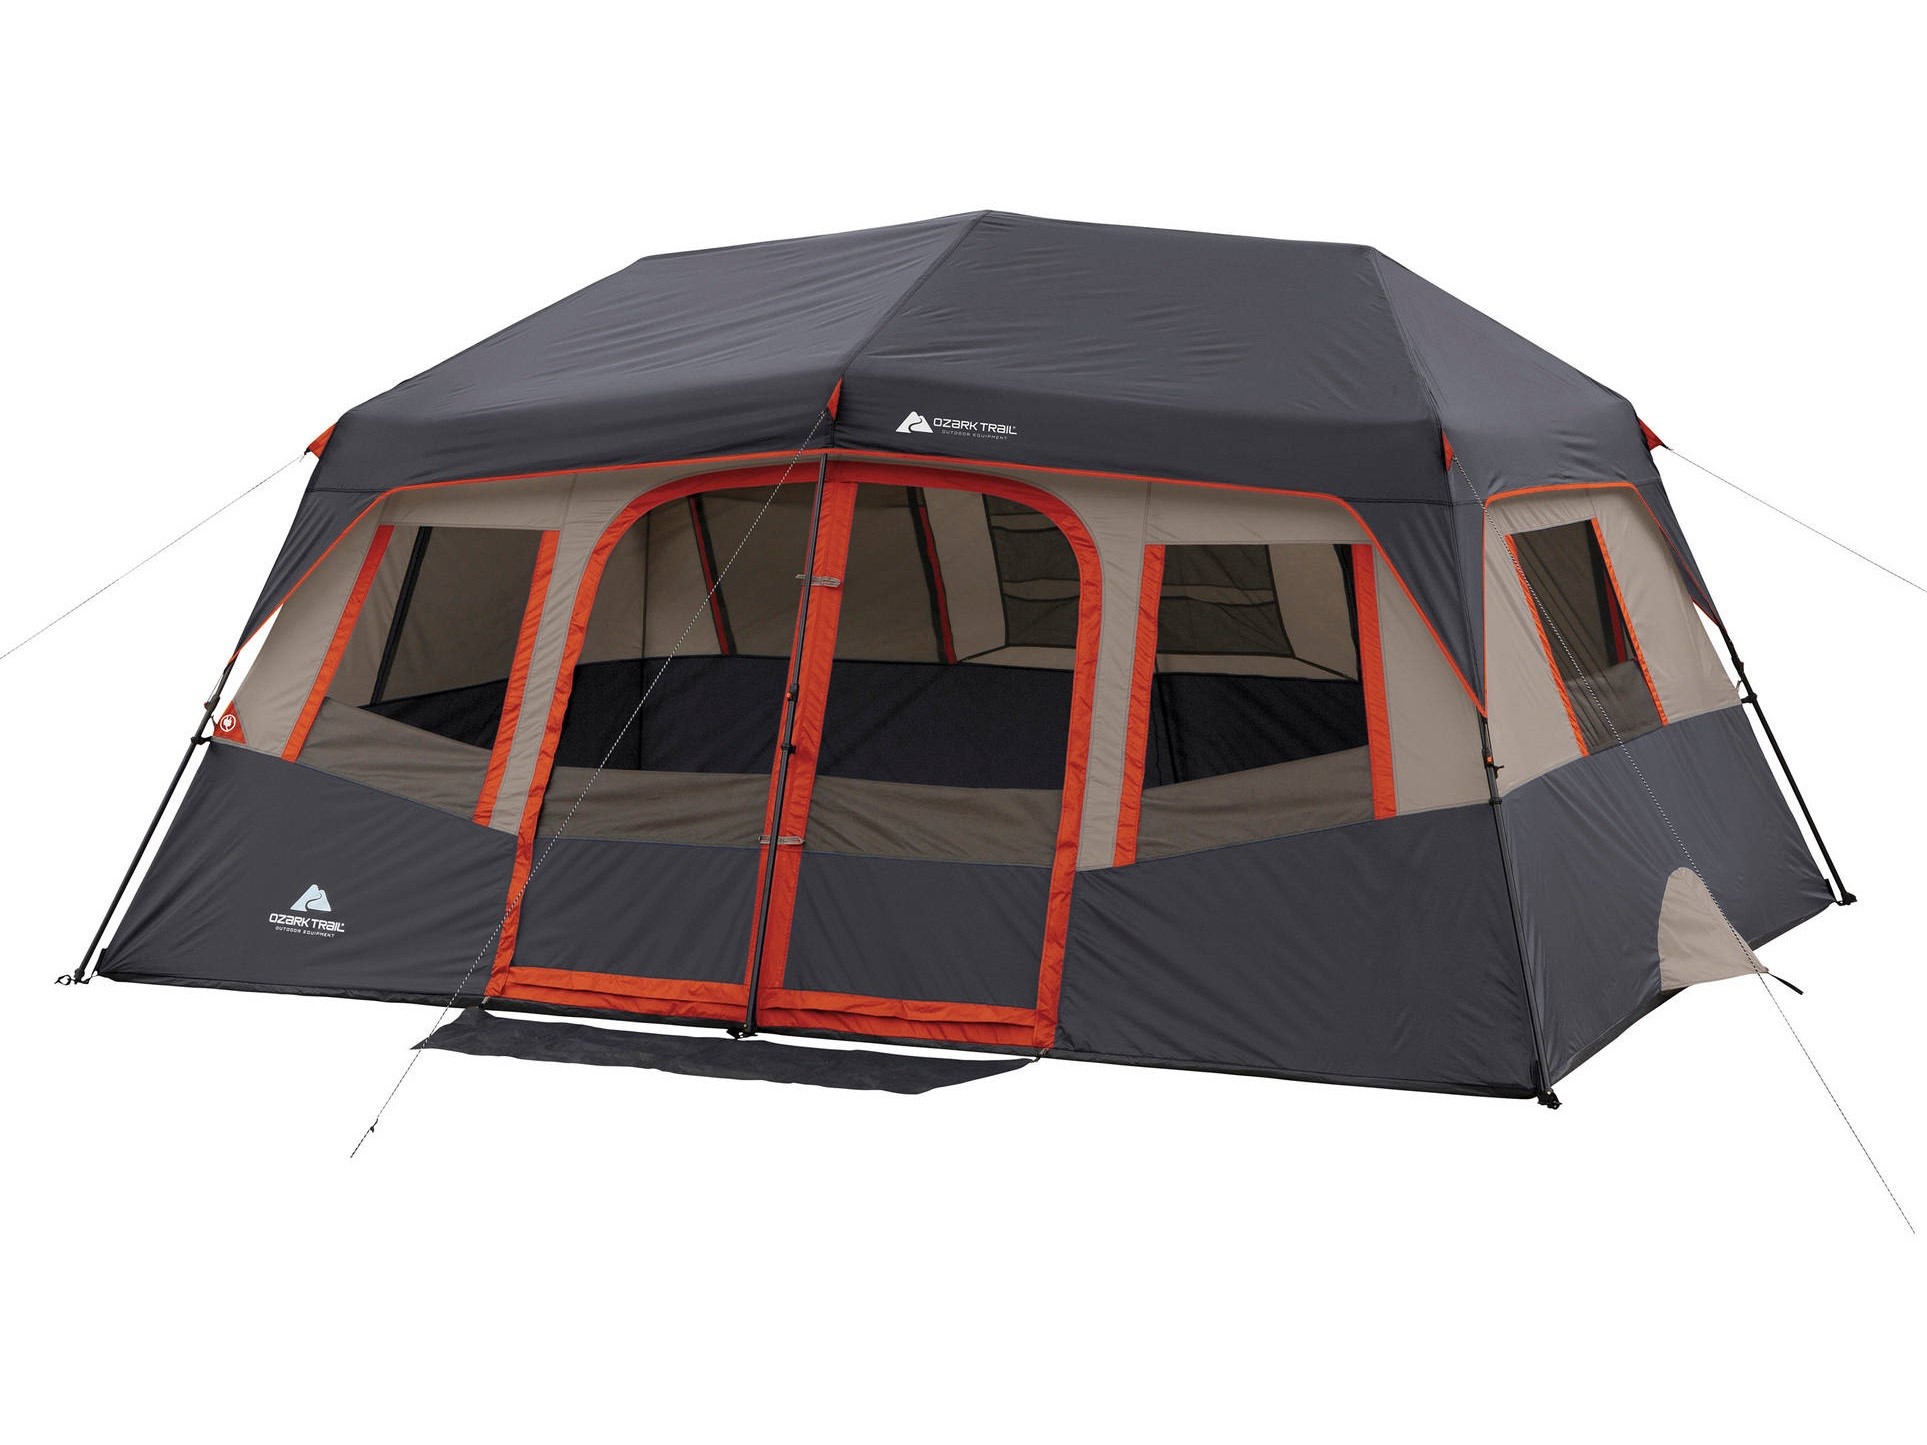 https://www.themanual.com/wp-content/uploads/sites/9/2021/08/ozark-trail-10-person-instant-cabin-tent.jpeg?fit=1927%2C1445&p=1